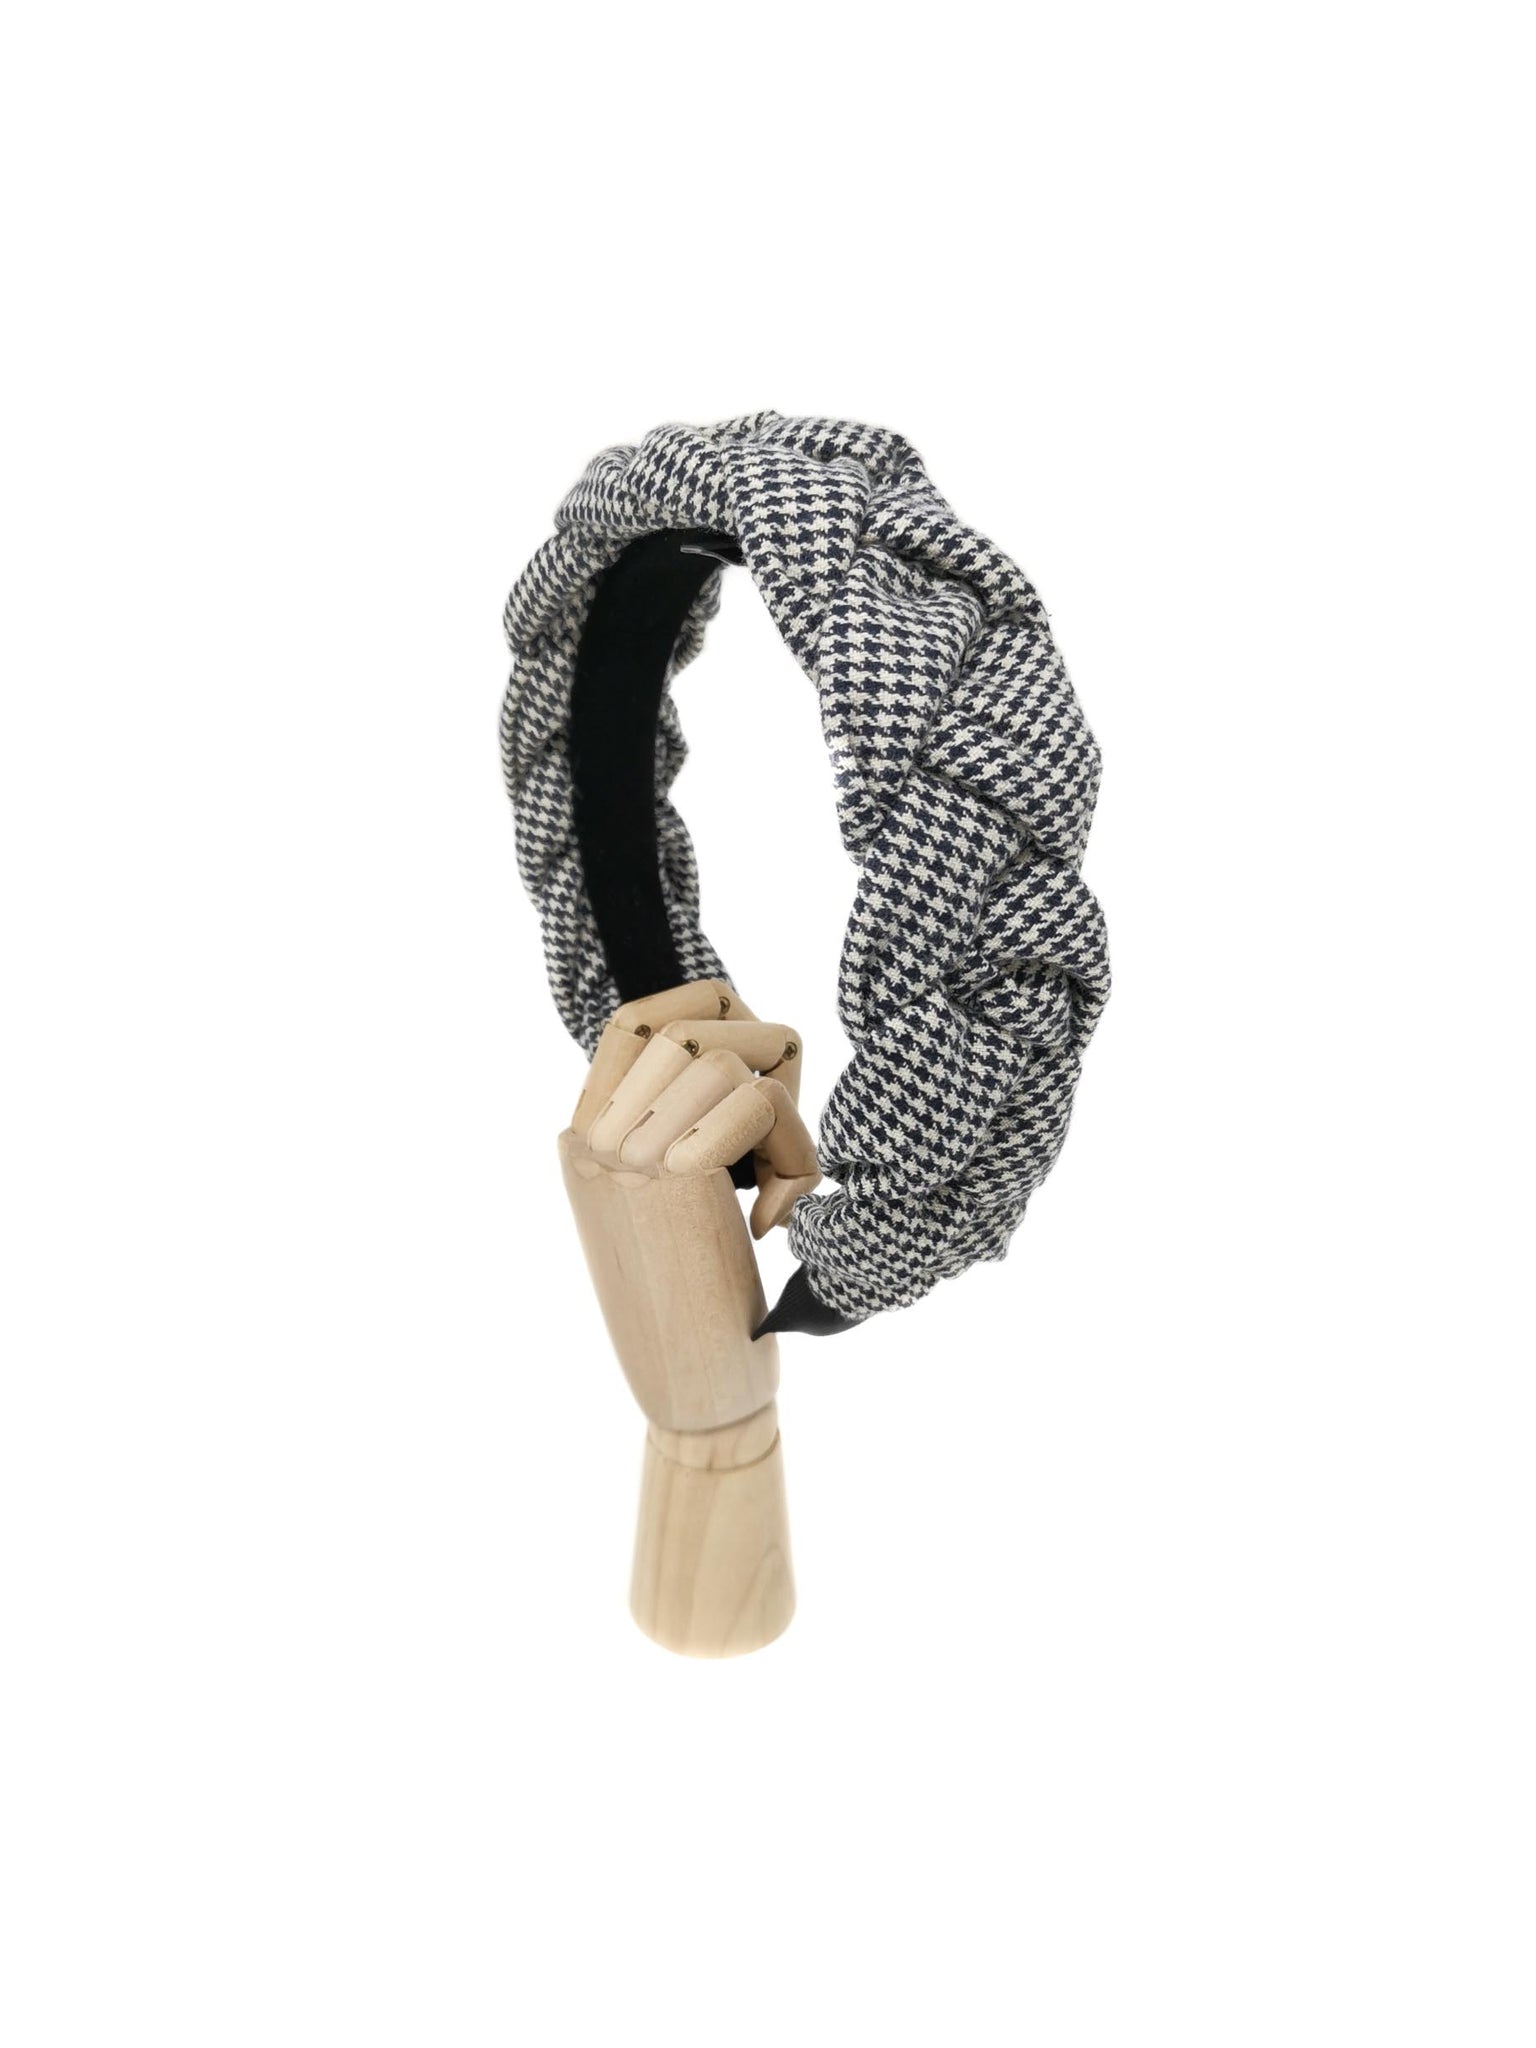 "Frida" pied de poule wool braided hairband